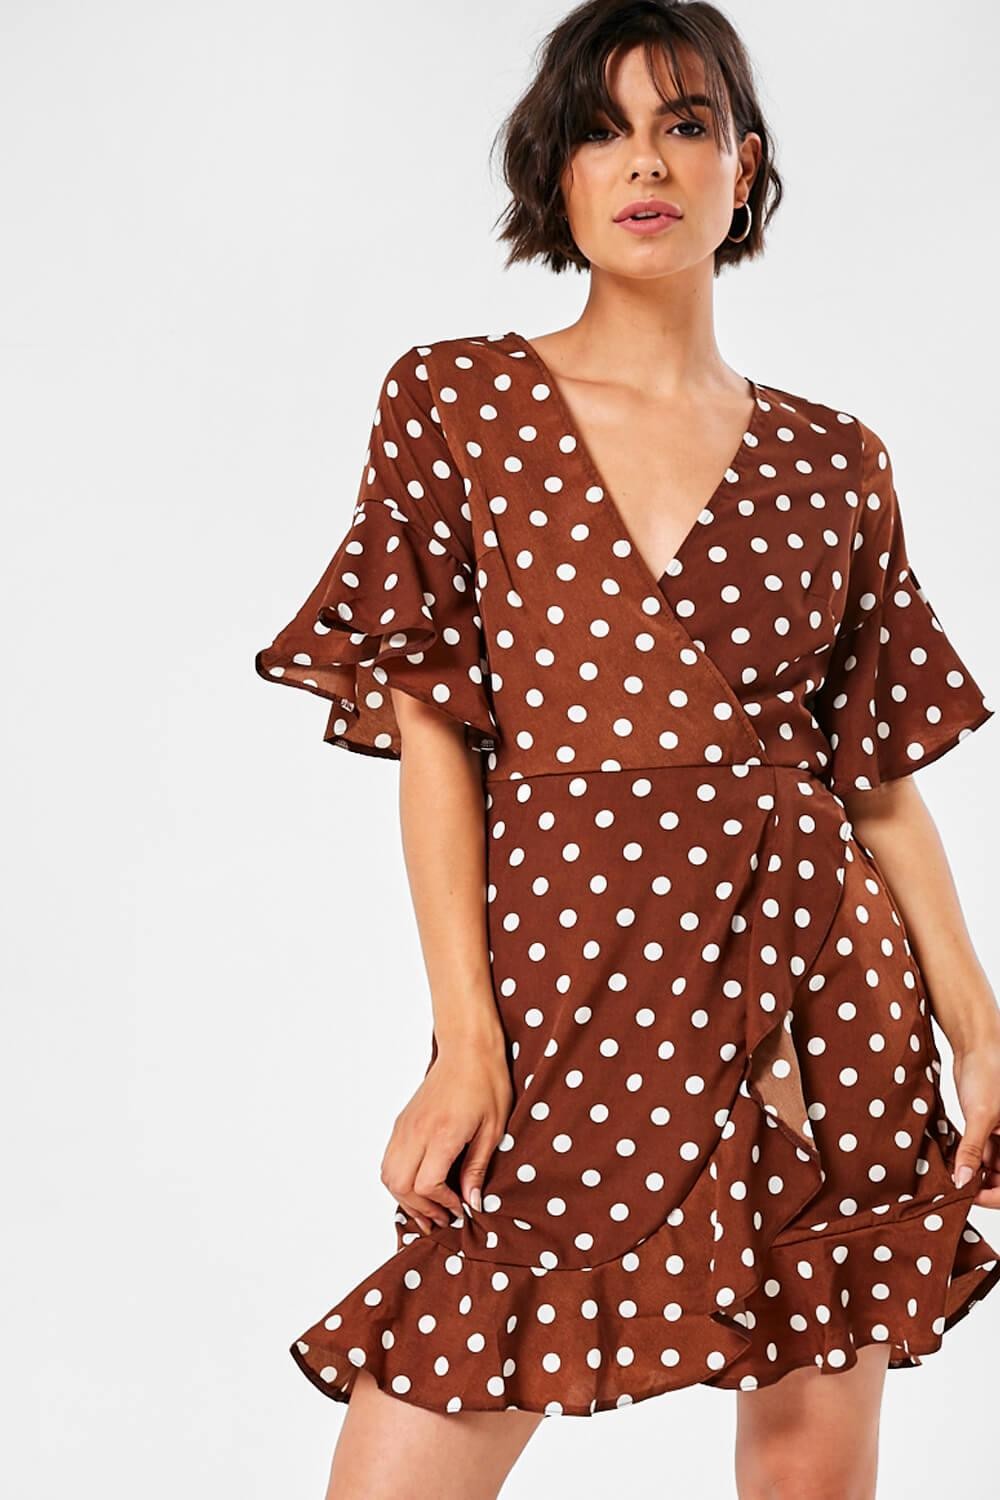 AX Paris Sabine Frill Wrap Dress in Brown Polka Dot | iCLOTHING